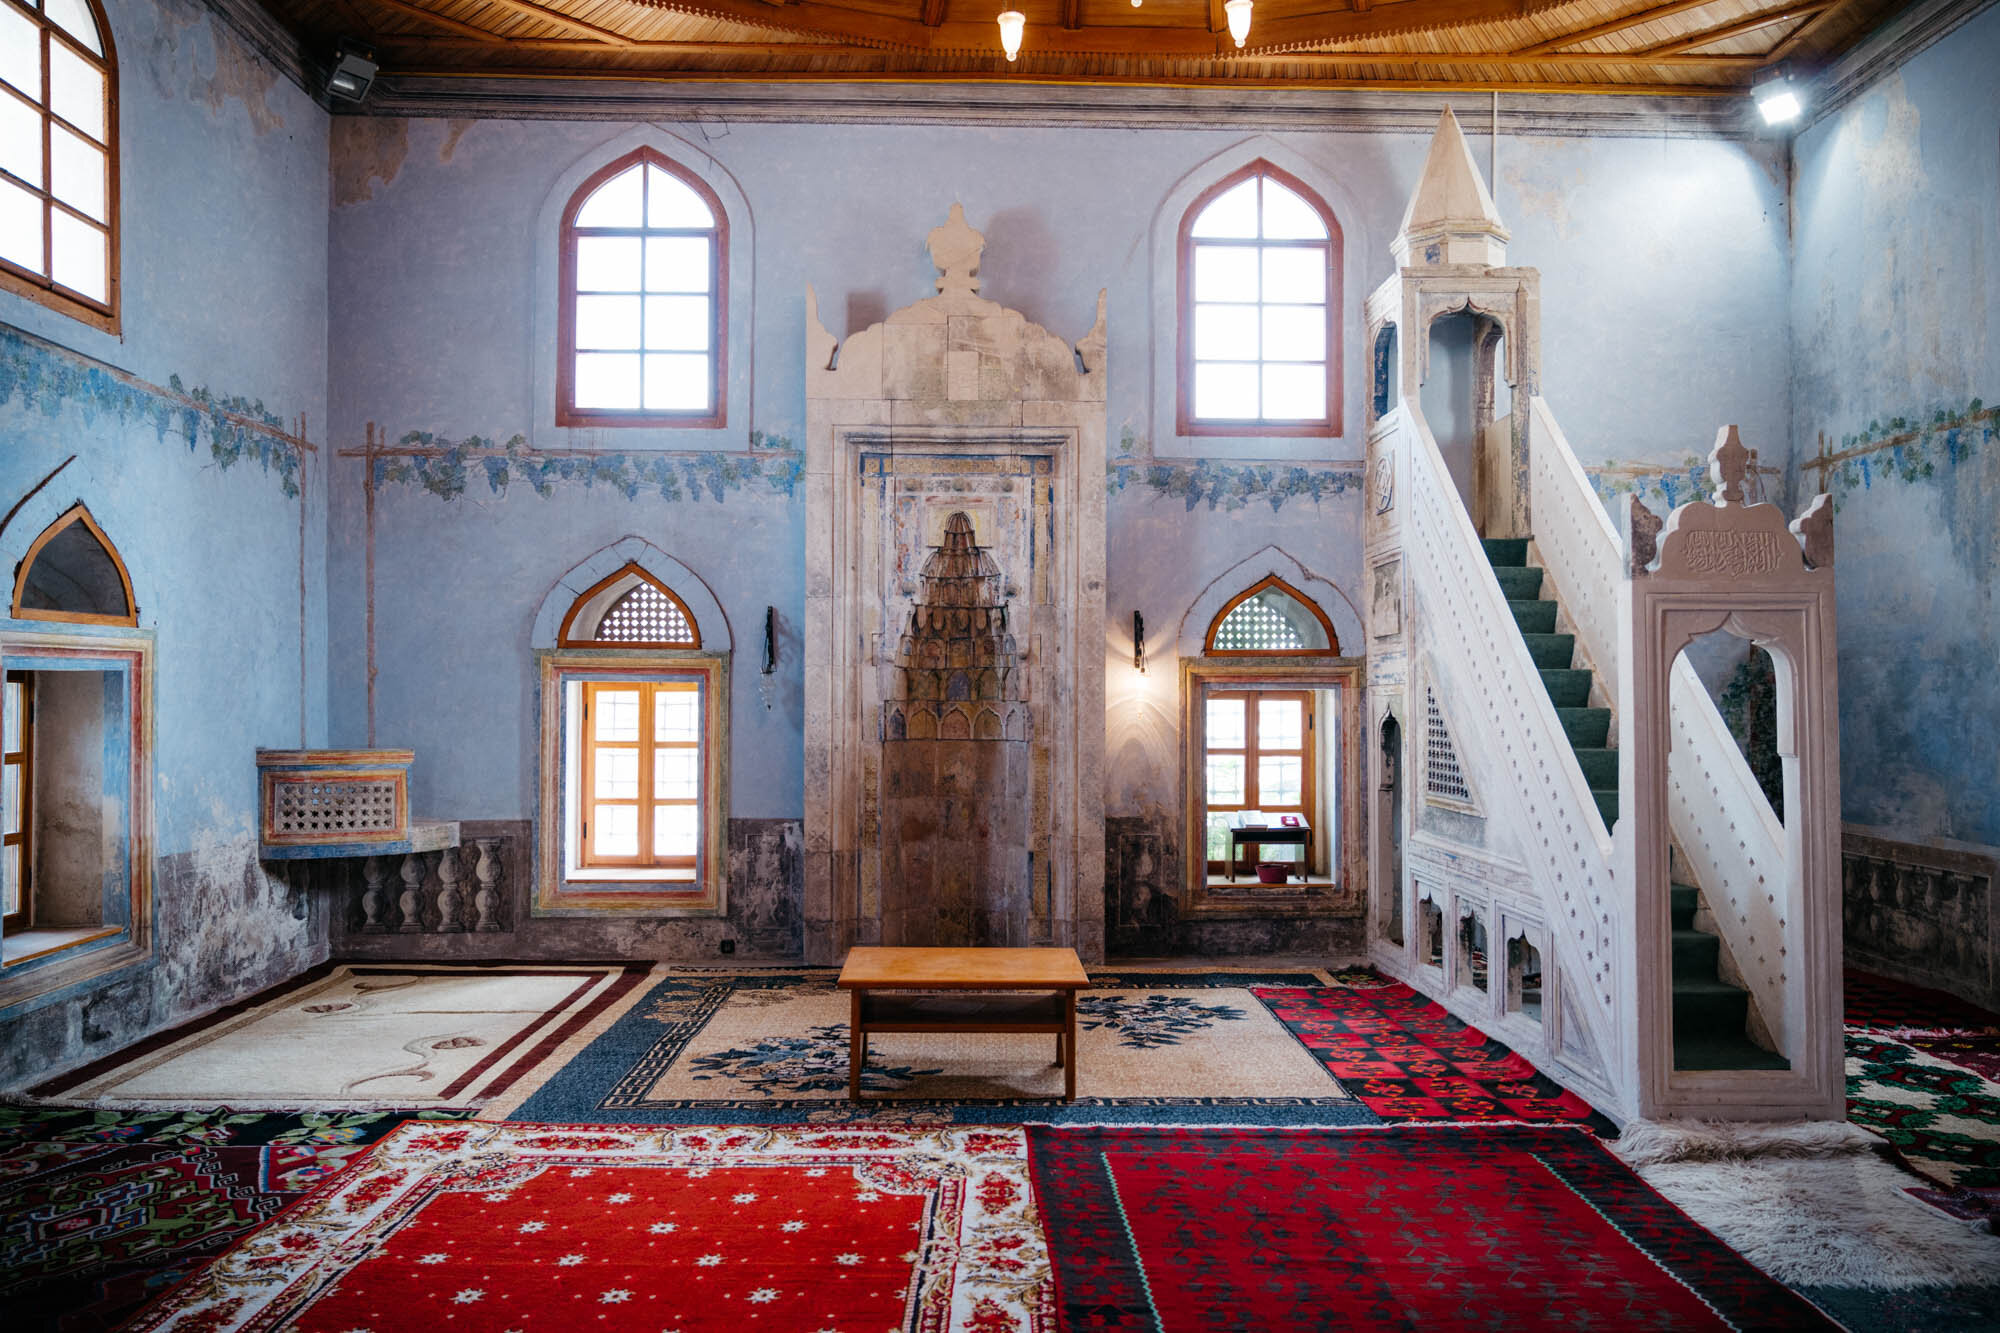  Inside the Hadži Kurt Mosque 